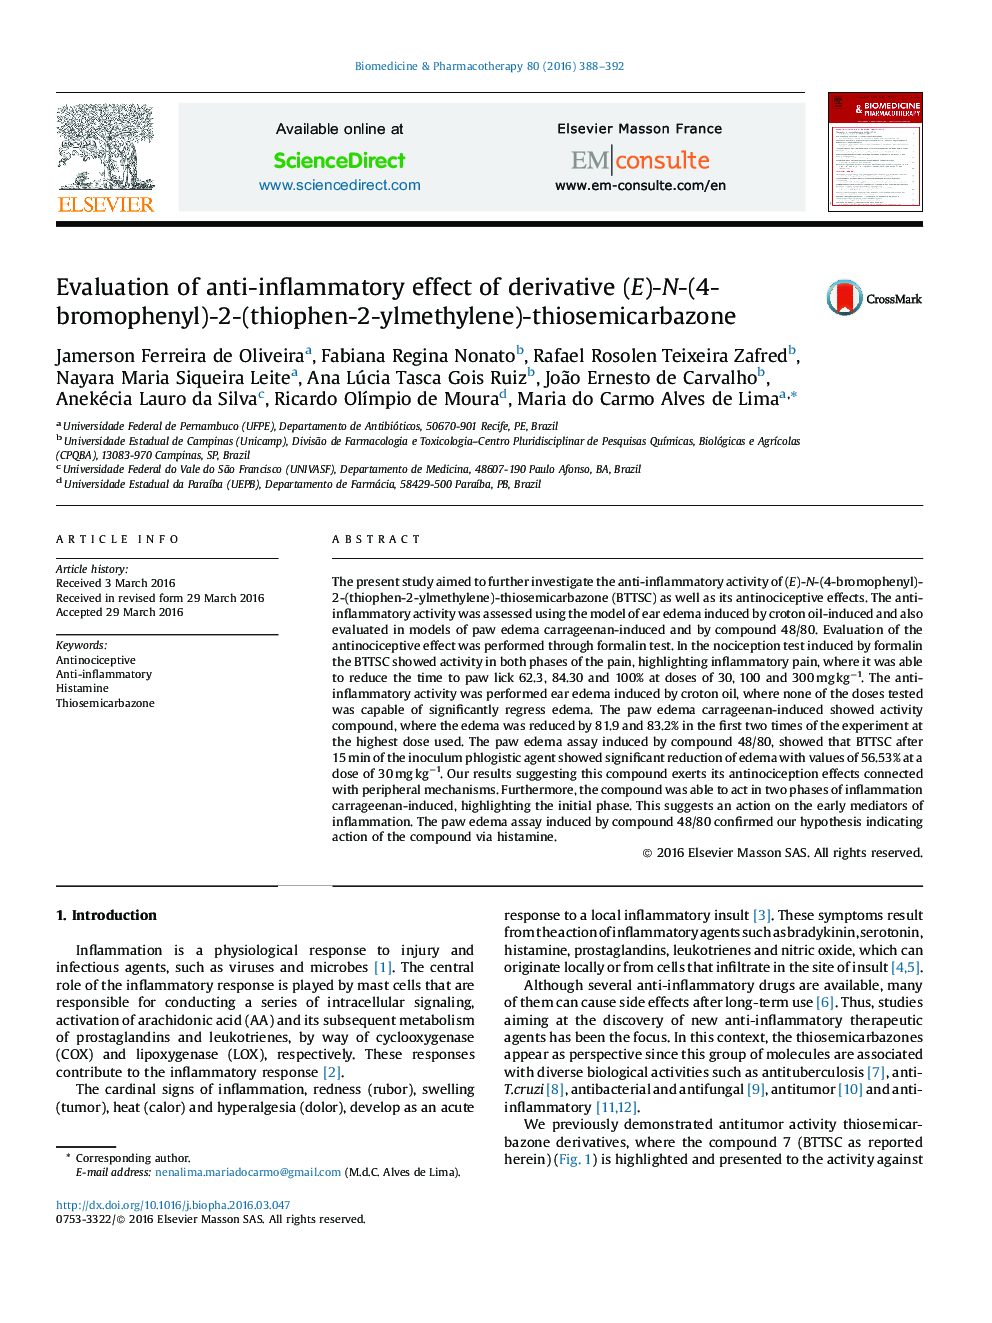 Evaluation of anti-inflammatory effect of derivative (E)-N-(4-bromophenyl)-2-(thiophen-2-ylmethylene)-thiosemicarbazone